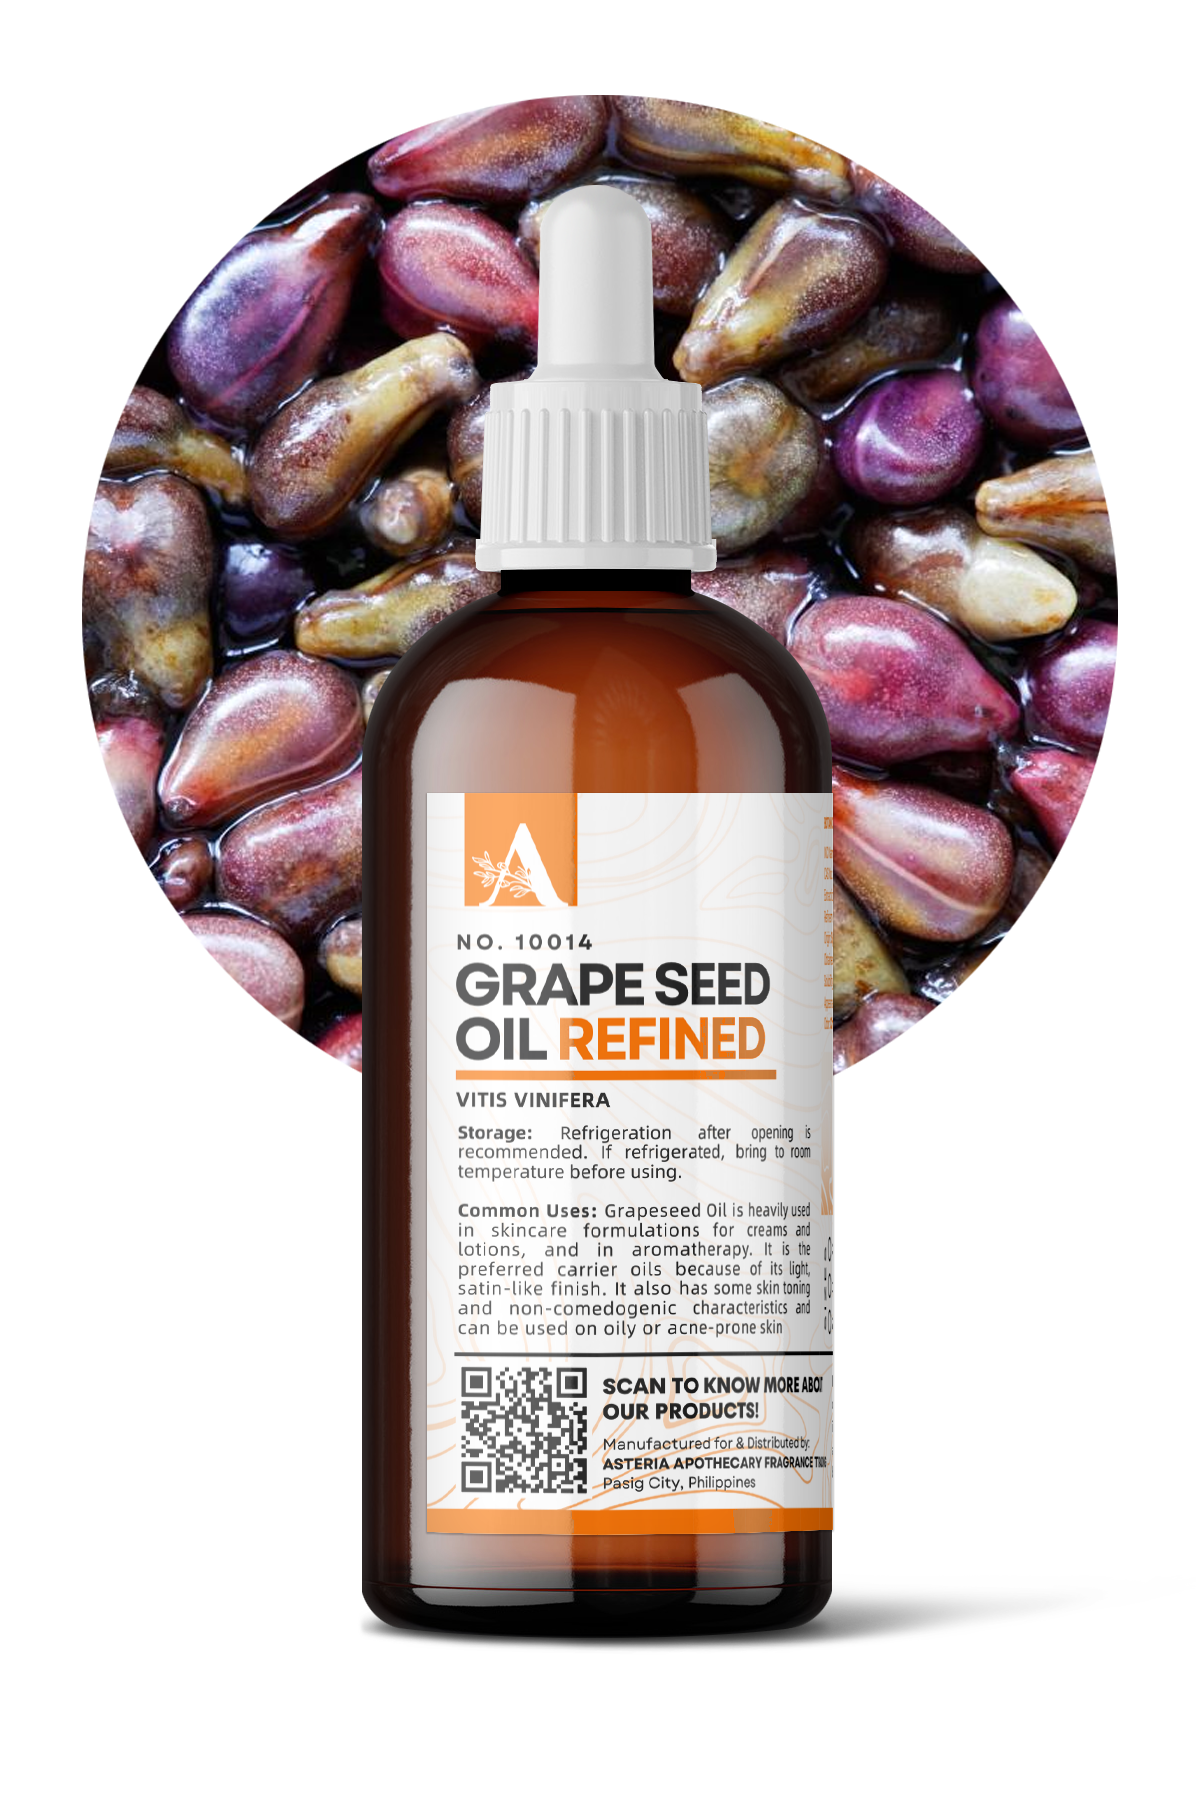 Grape Seed Oil, Refined